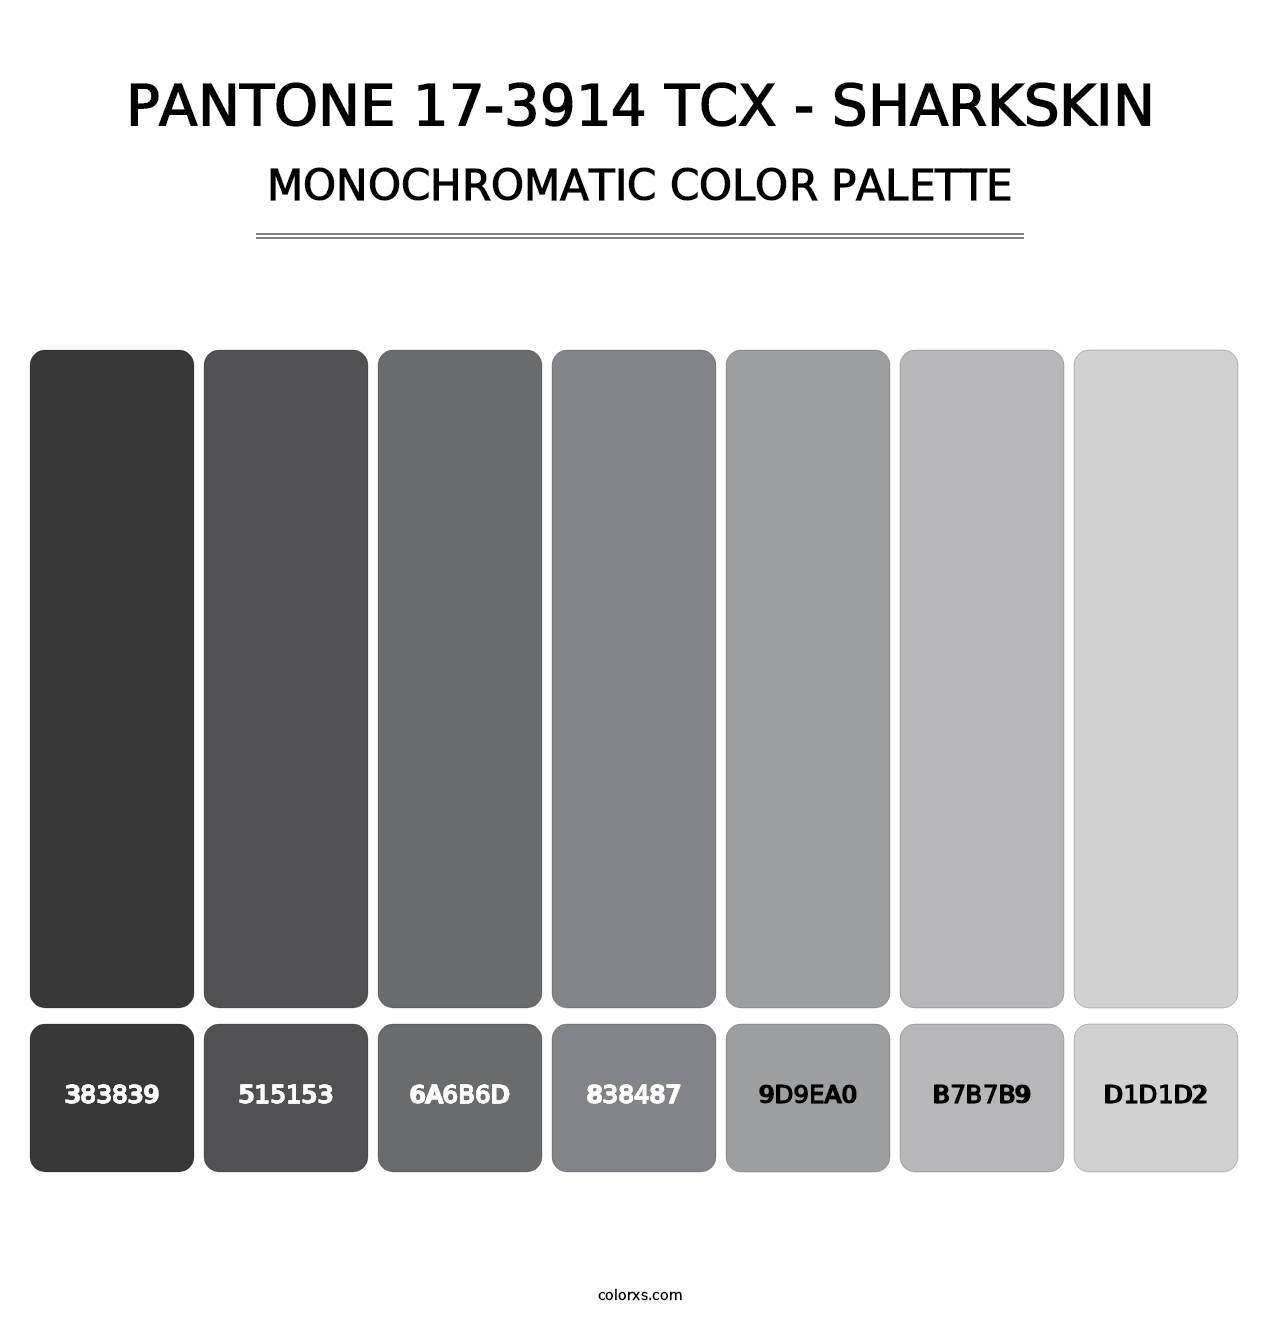 PANTONE 17-3914 TCX - Sharkskin - Monochromatic Color Palette